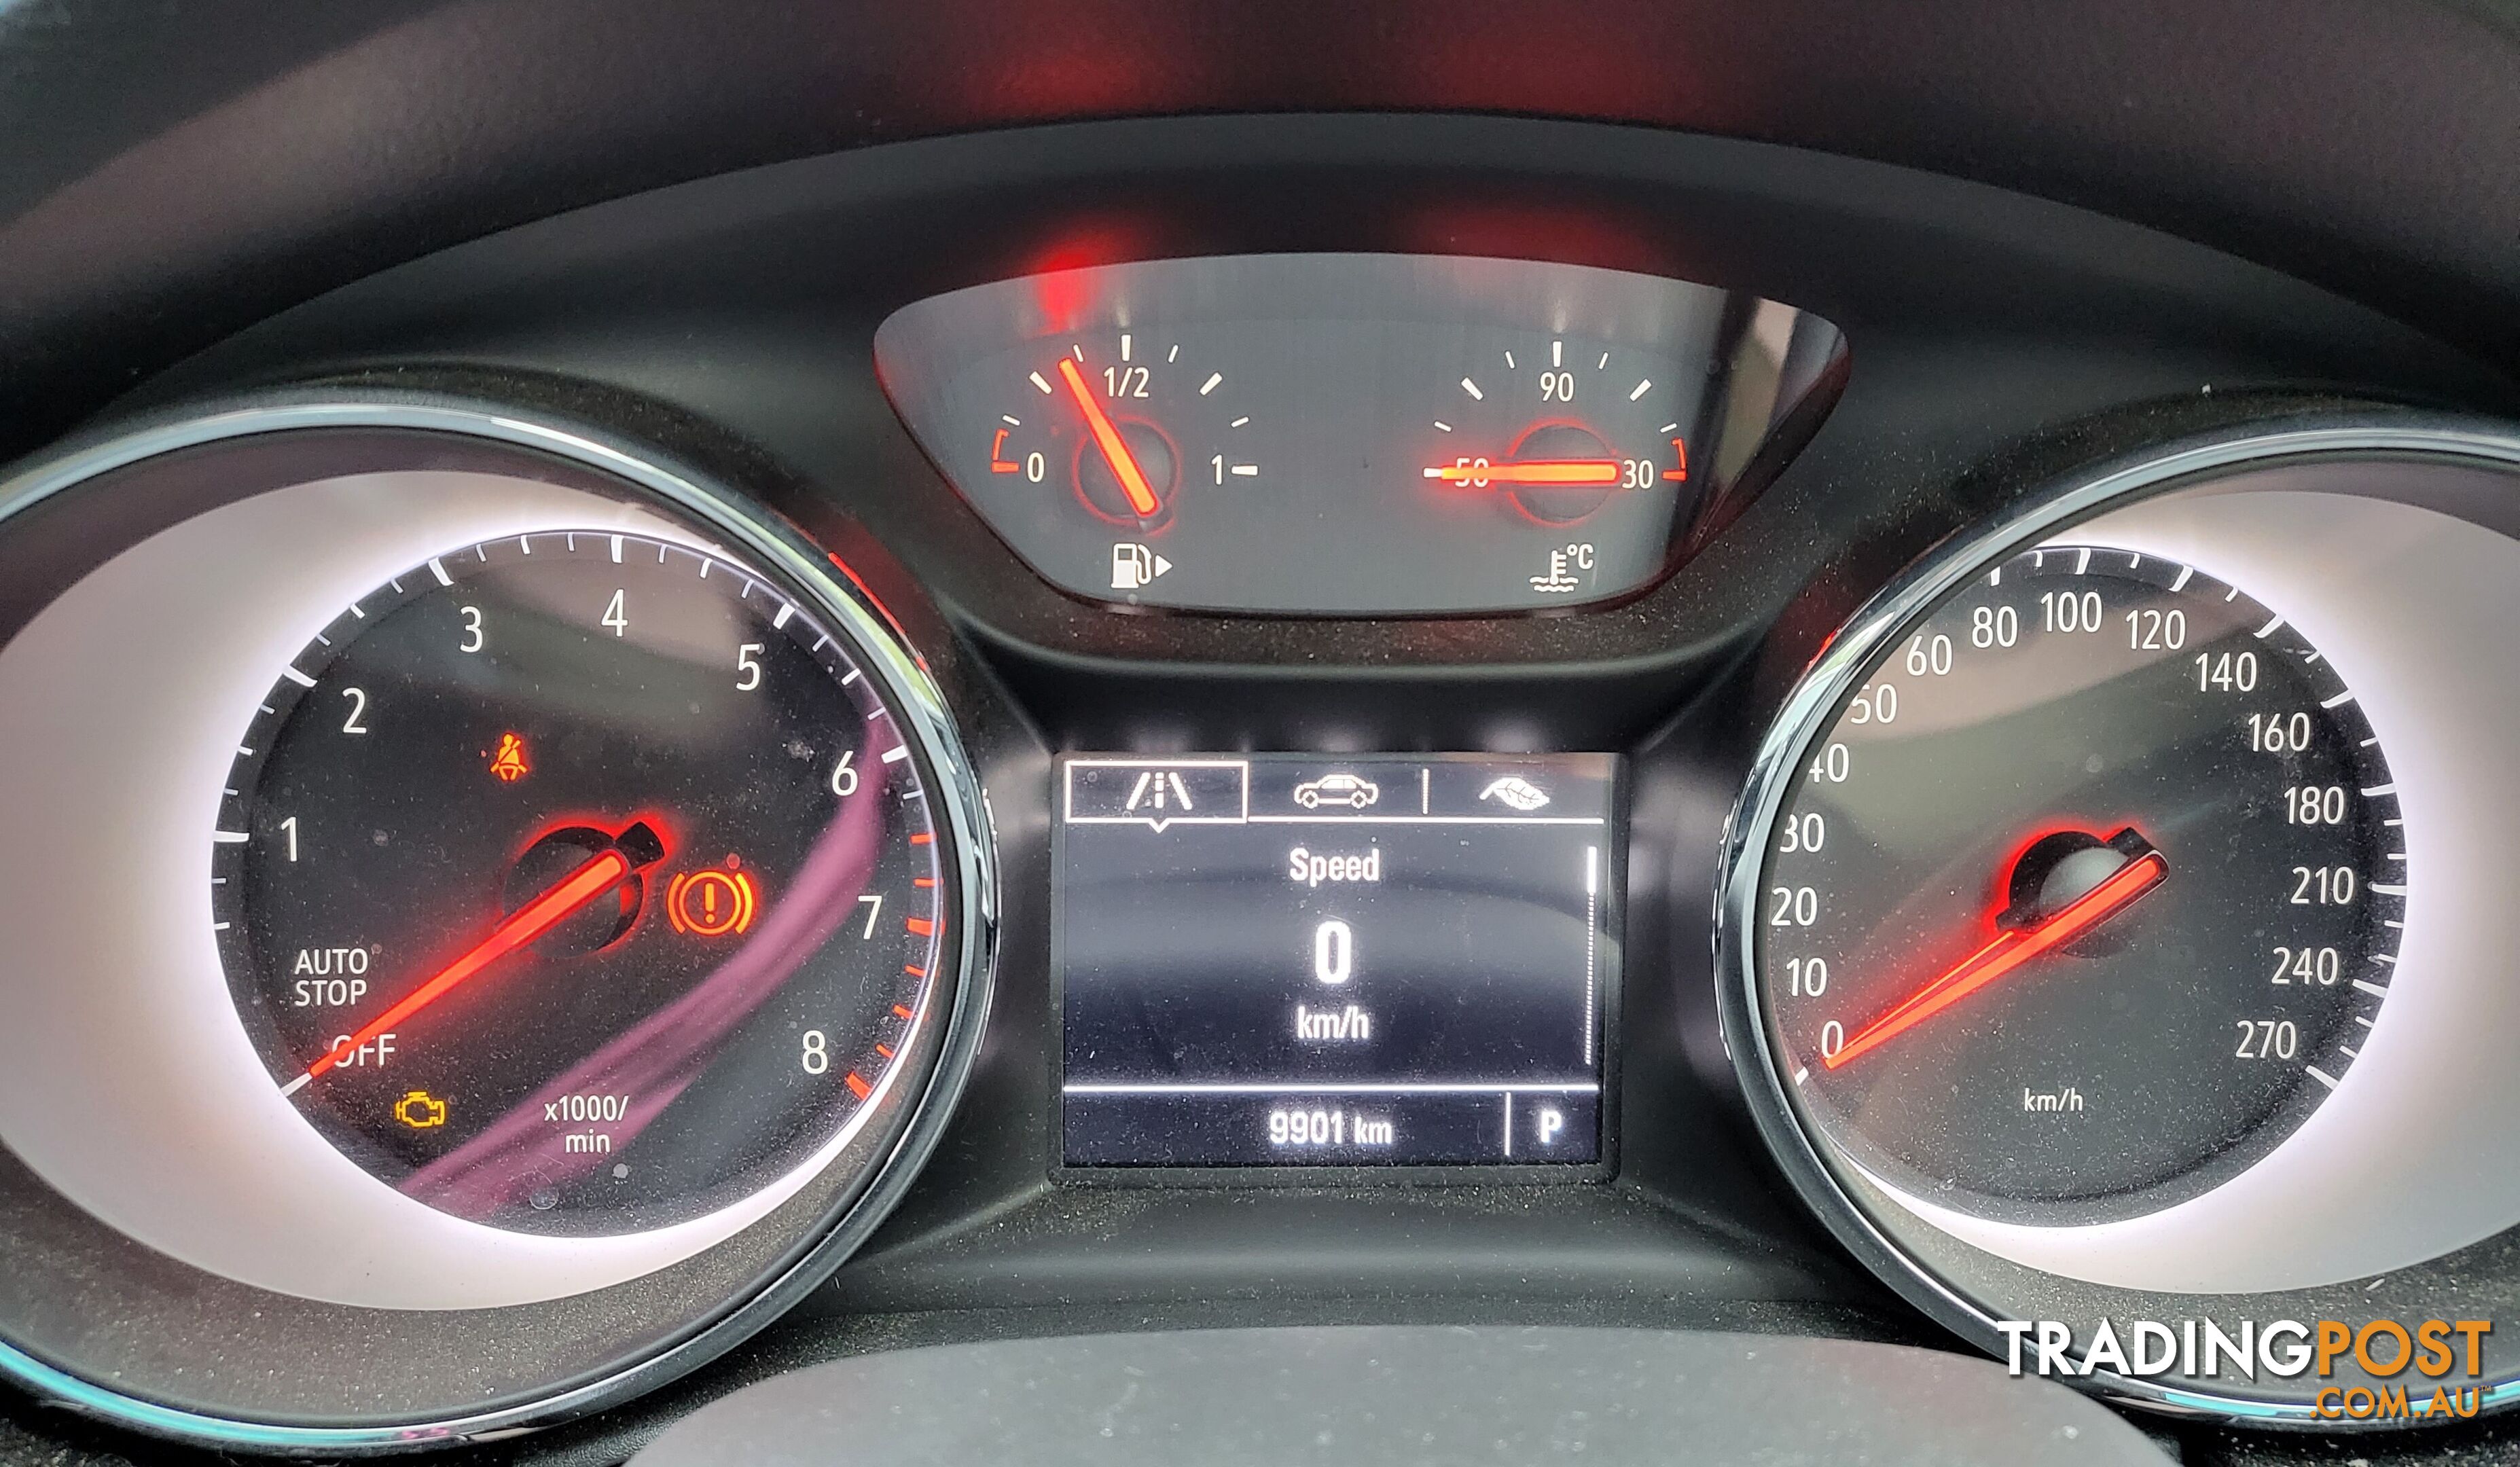 2018 Holden Astra BK R+ Hatchback Automatic